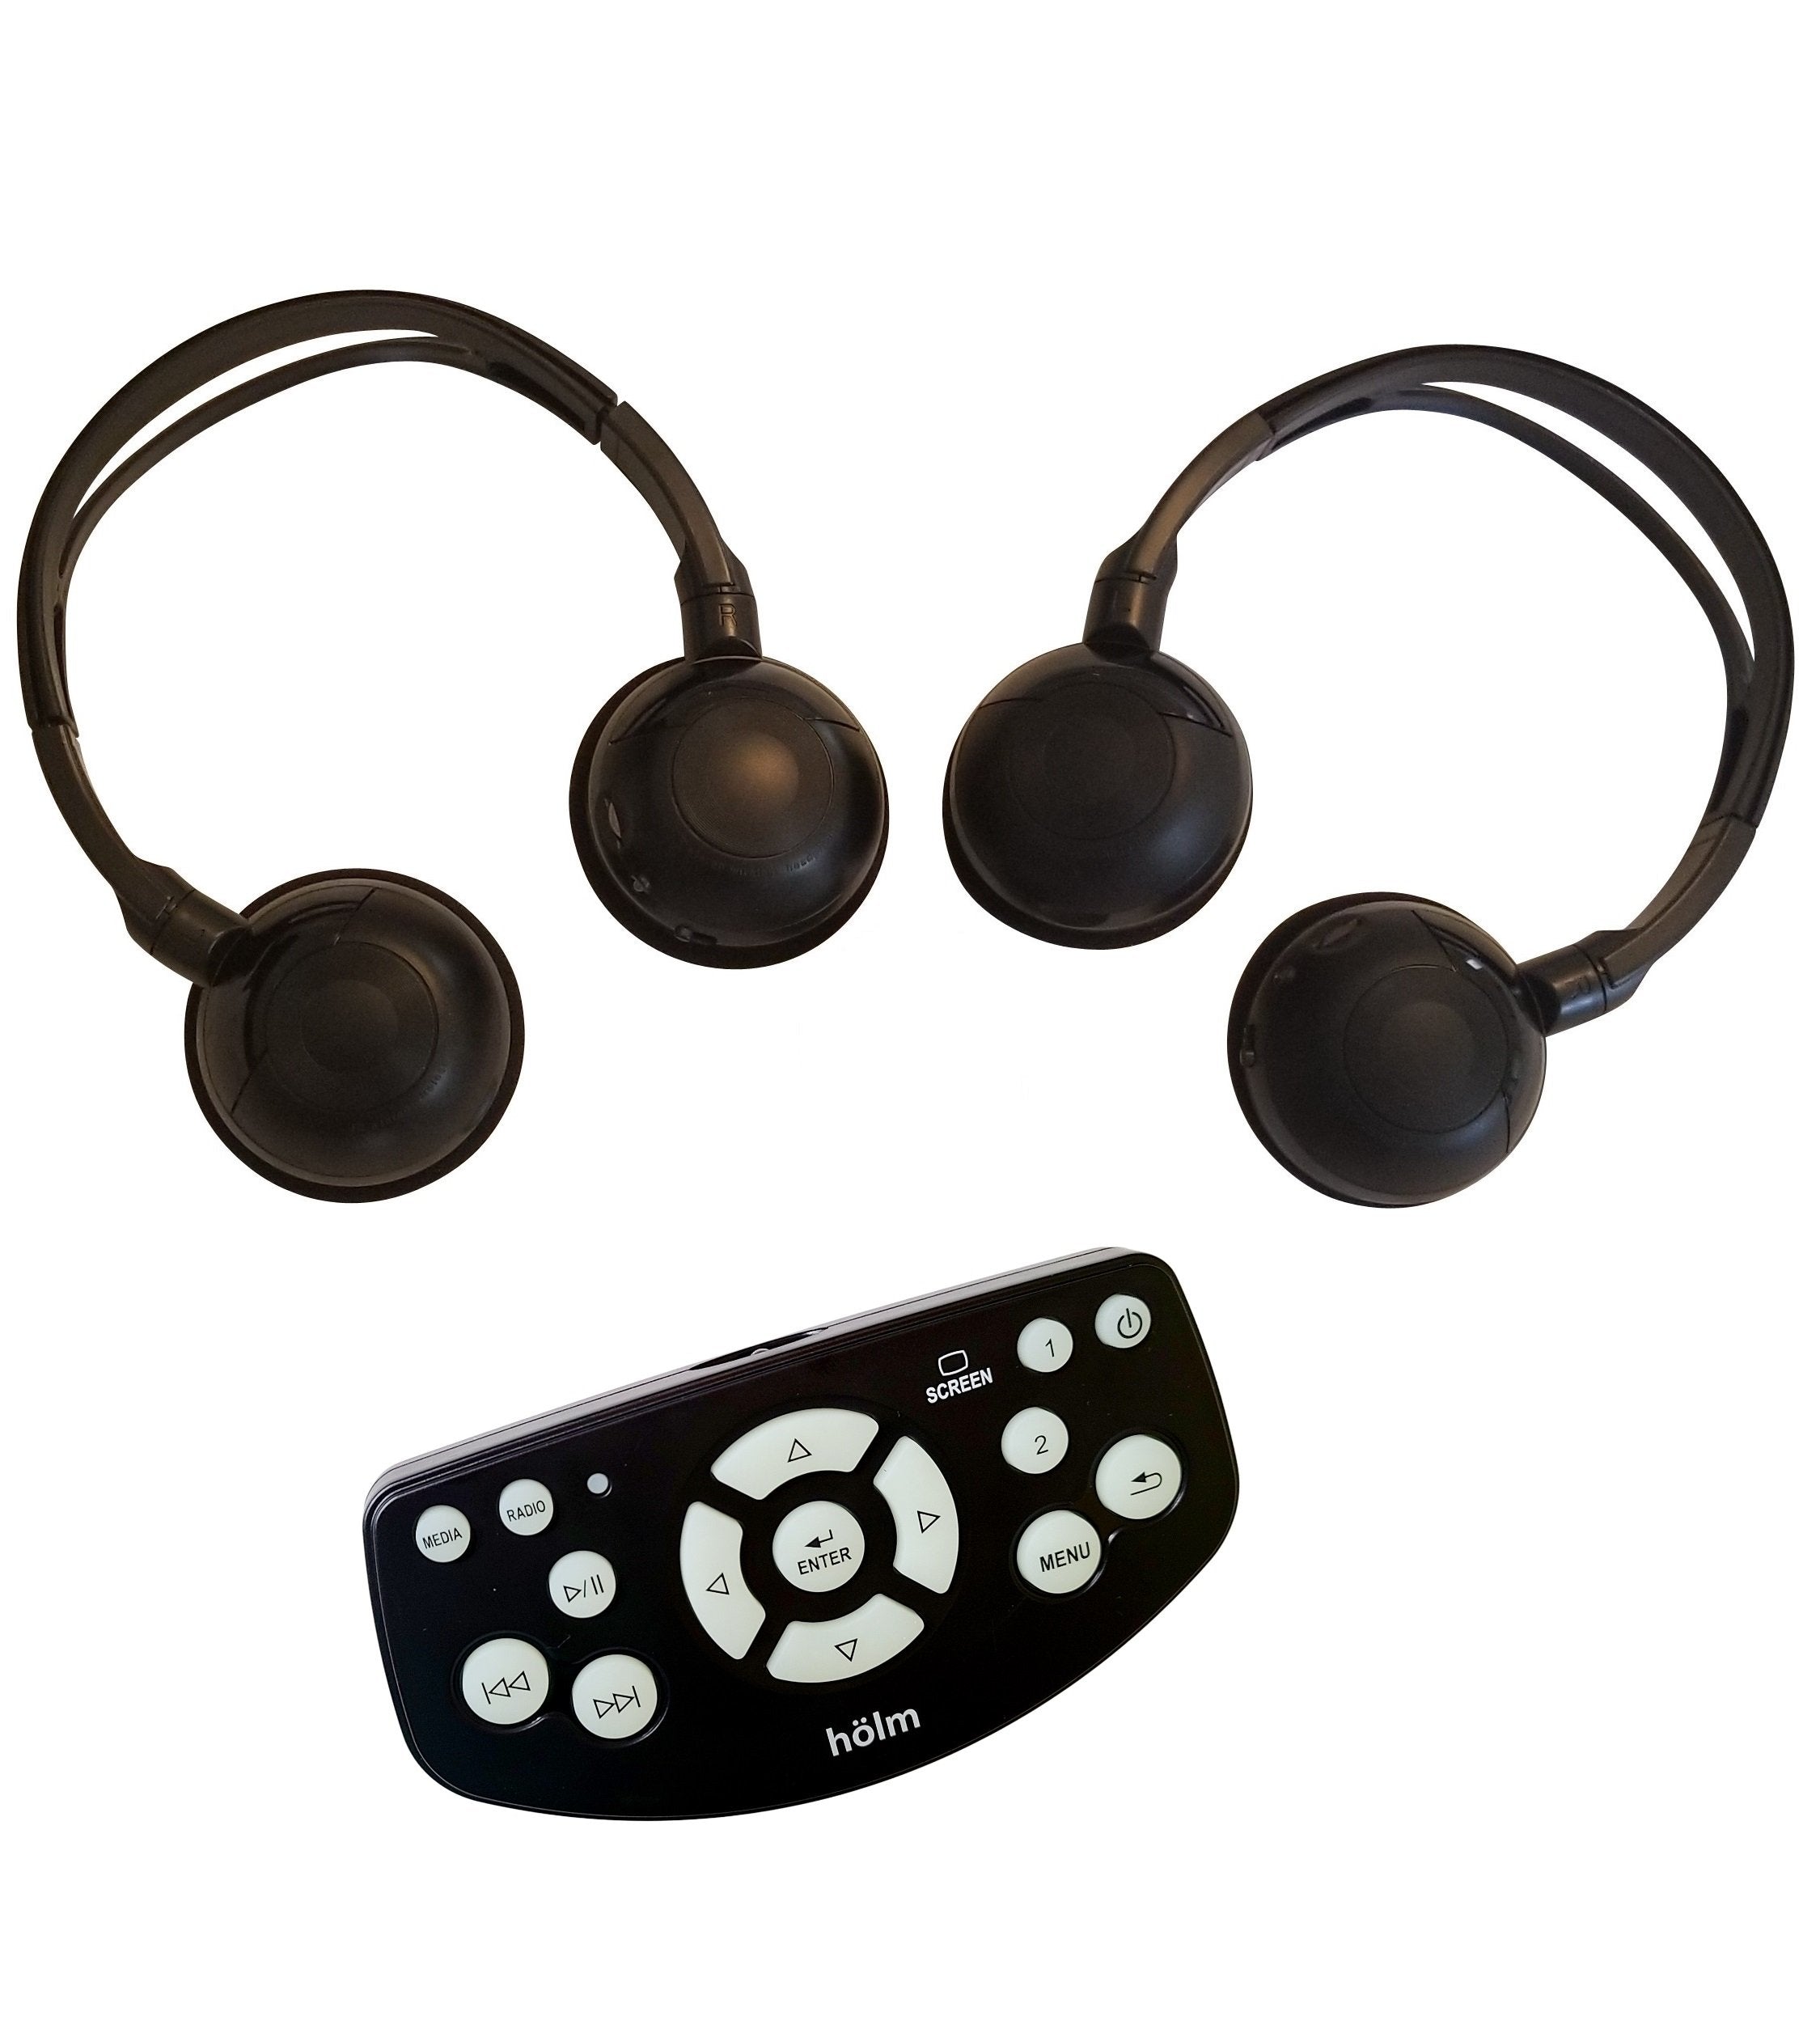 2016 GMC Sierra BluRay DVD Remote And Wireless Headphones